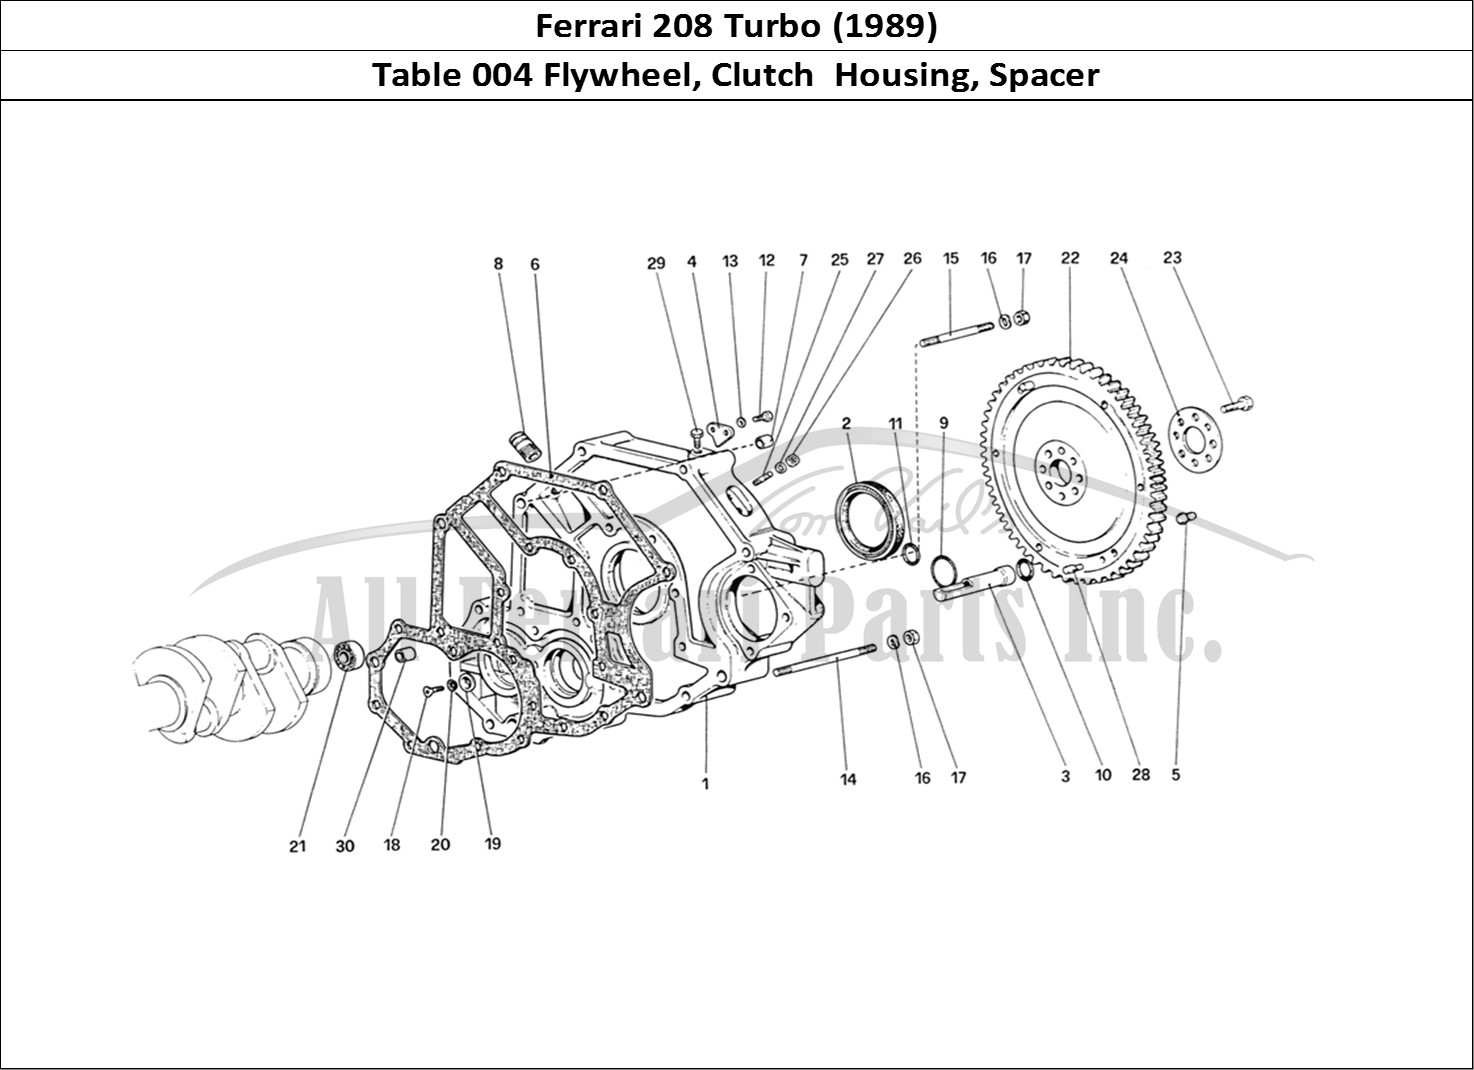 Ferrari Parts Ferrari 208 Turbo (1989) Page 004 Flywheel and Clutch Housi